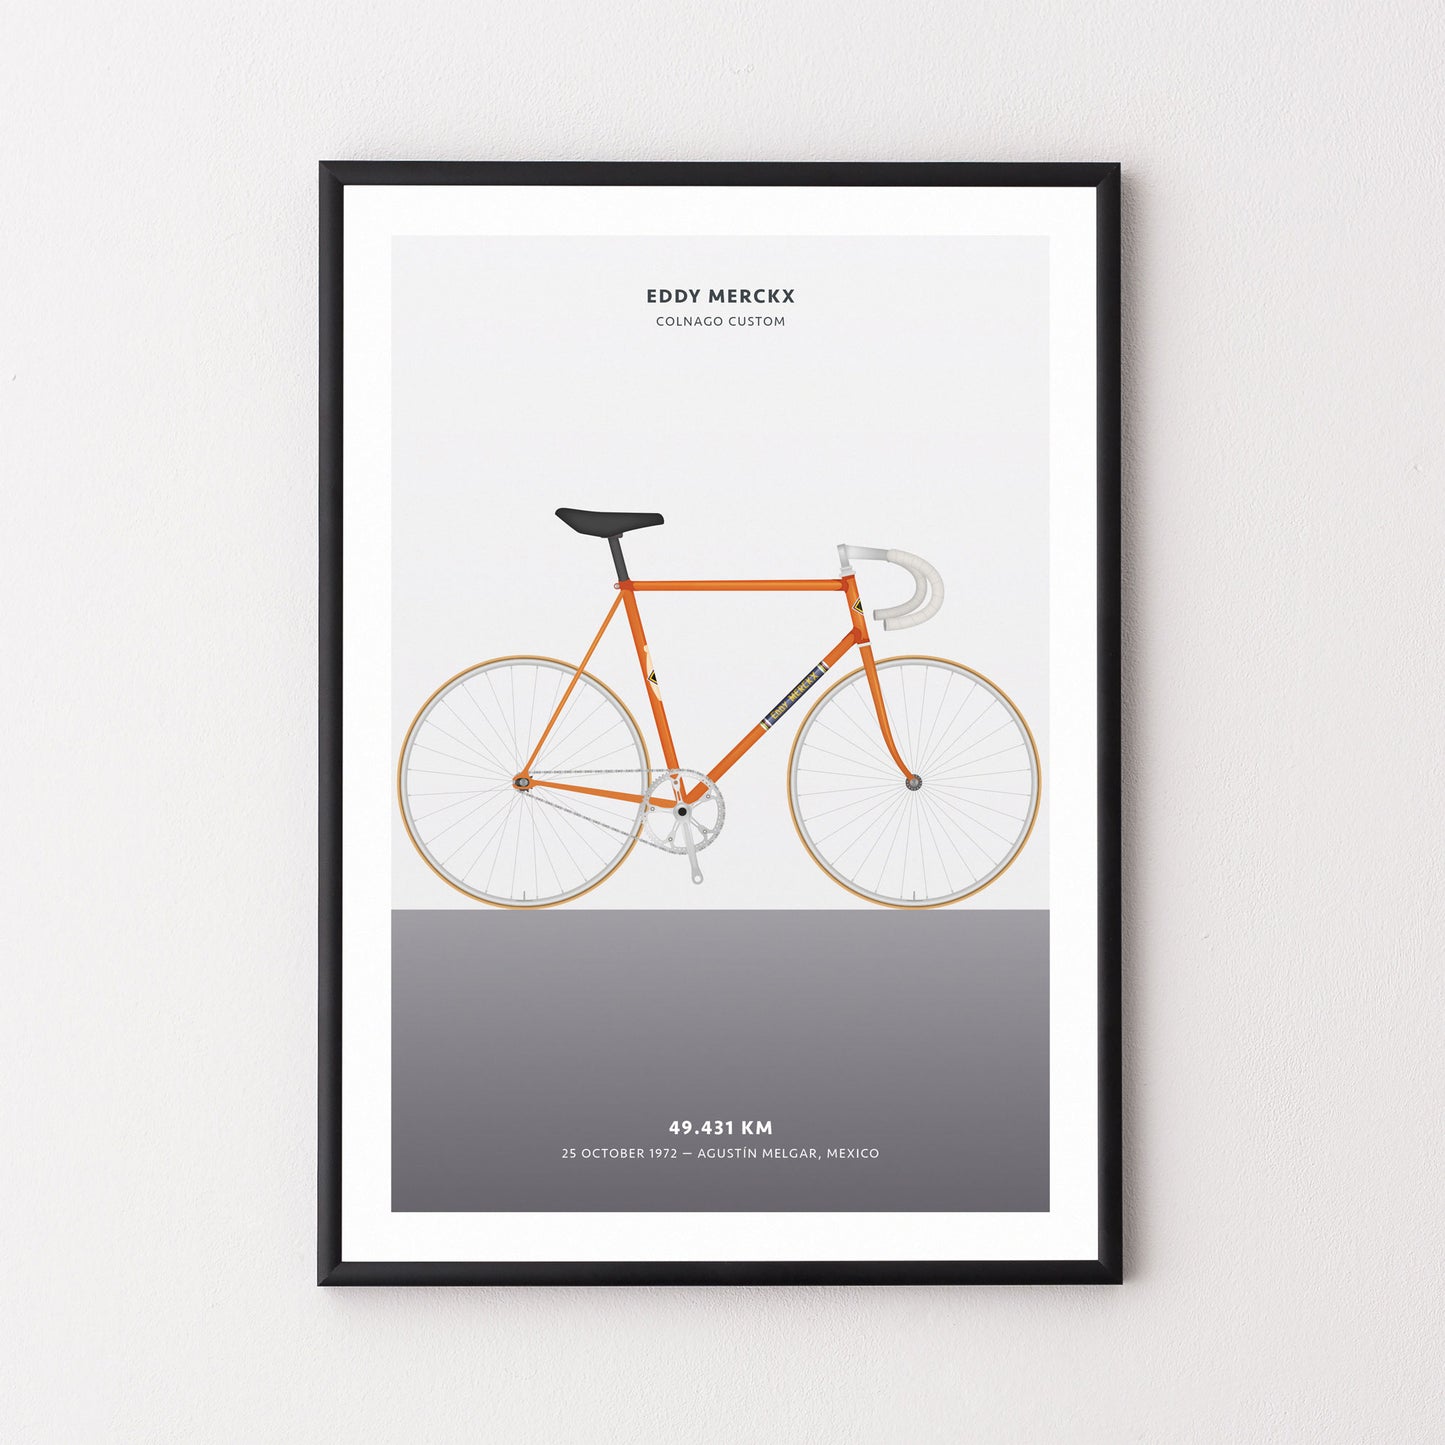 Eddy Merckx Hour Record – Poster – The English Cyclist